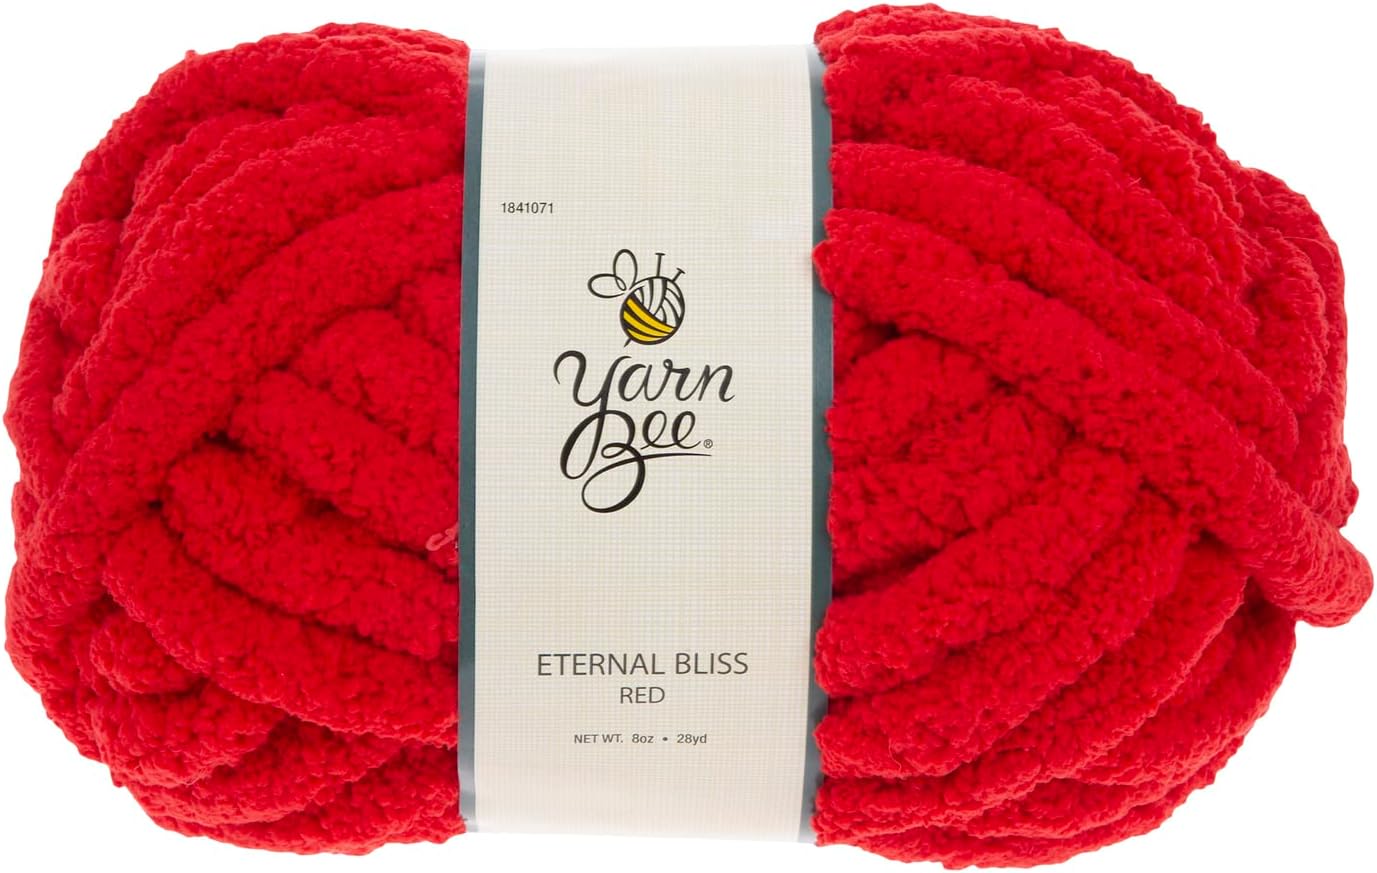 Yarn Bee Gray Yarn for Knitting & Crocheting – Jumbo Eternal Bliss Yarn Skein – Thick Knitting Polyester Yarn - Soft Chunky Yarn for Crocheting Blankets, Afghans, Hats, & More – DIY Craft Supplies